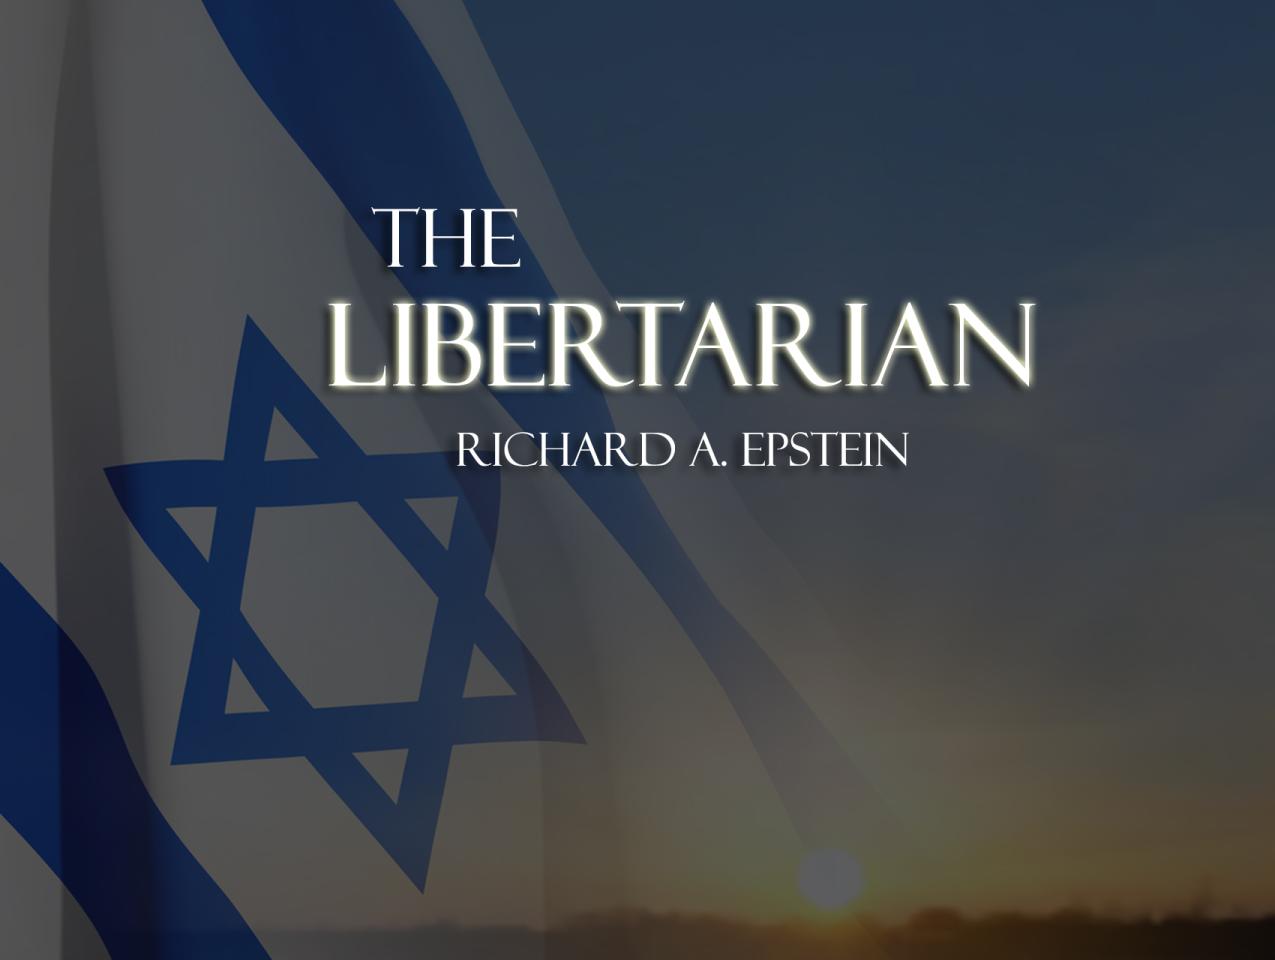 Libertarian-israel.jpg